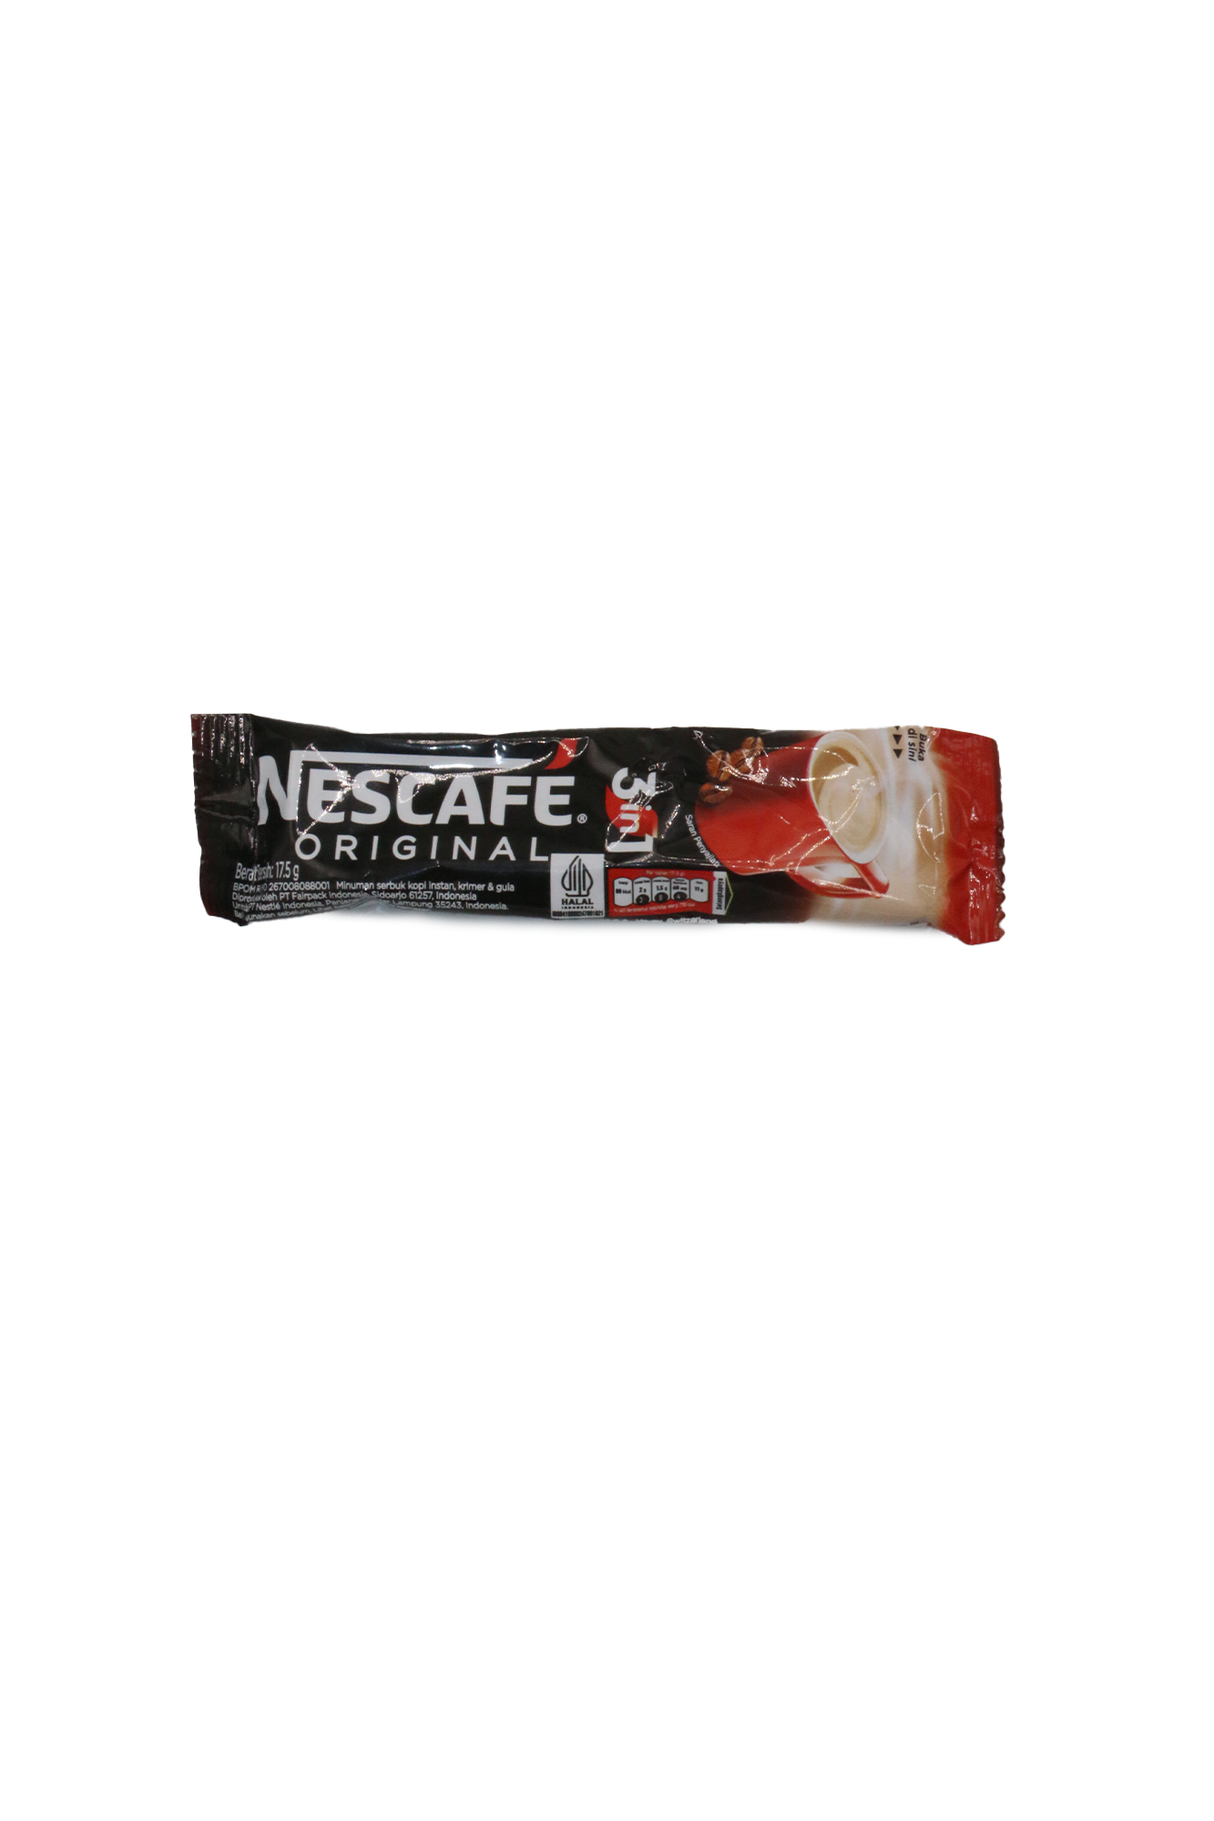 nescafe coffee original 3in1 17.5g